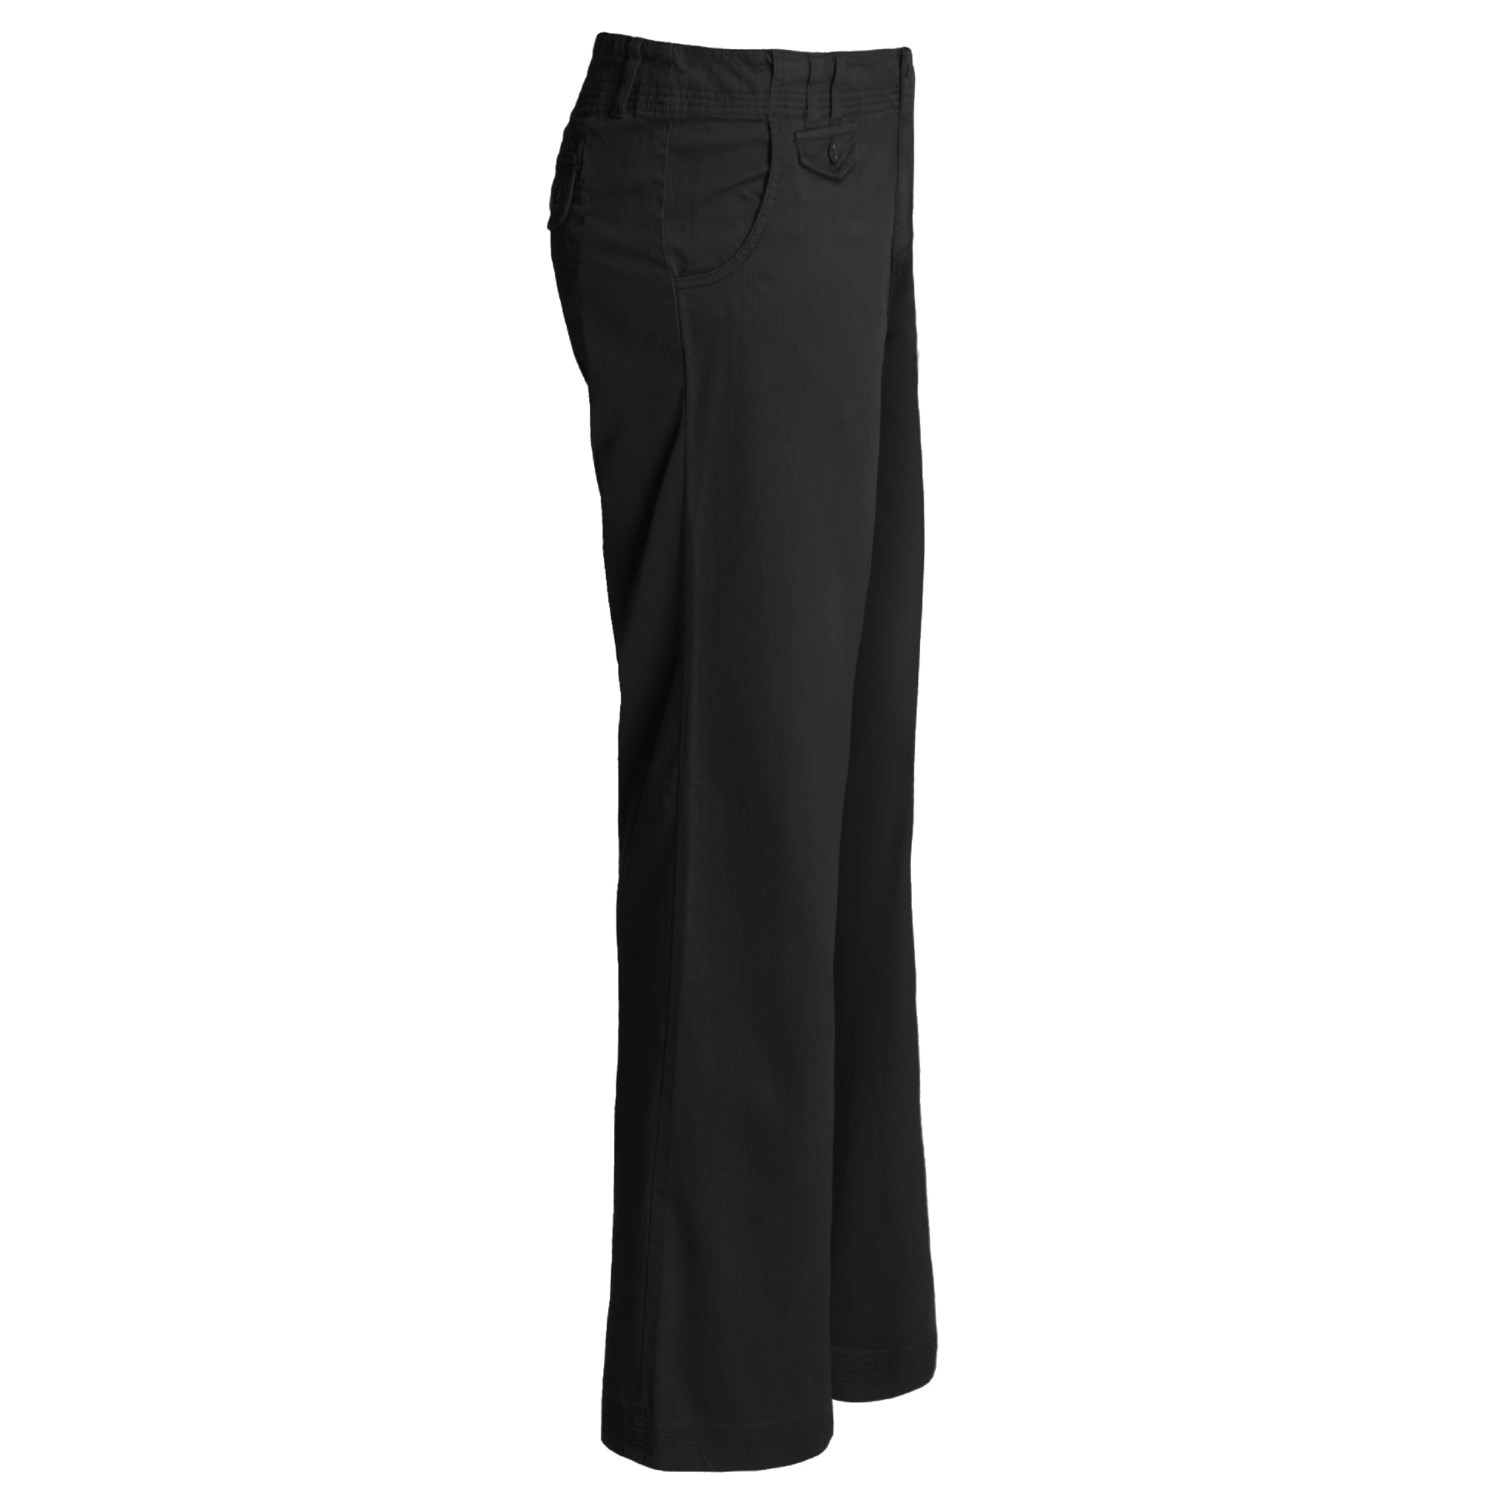 Gramicci Dahoon Corduroy Pants - Stretch Cotton (For Women) - Save 35%